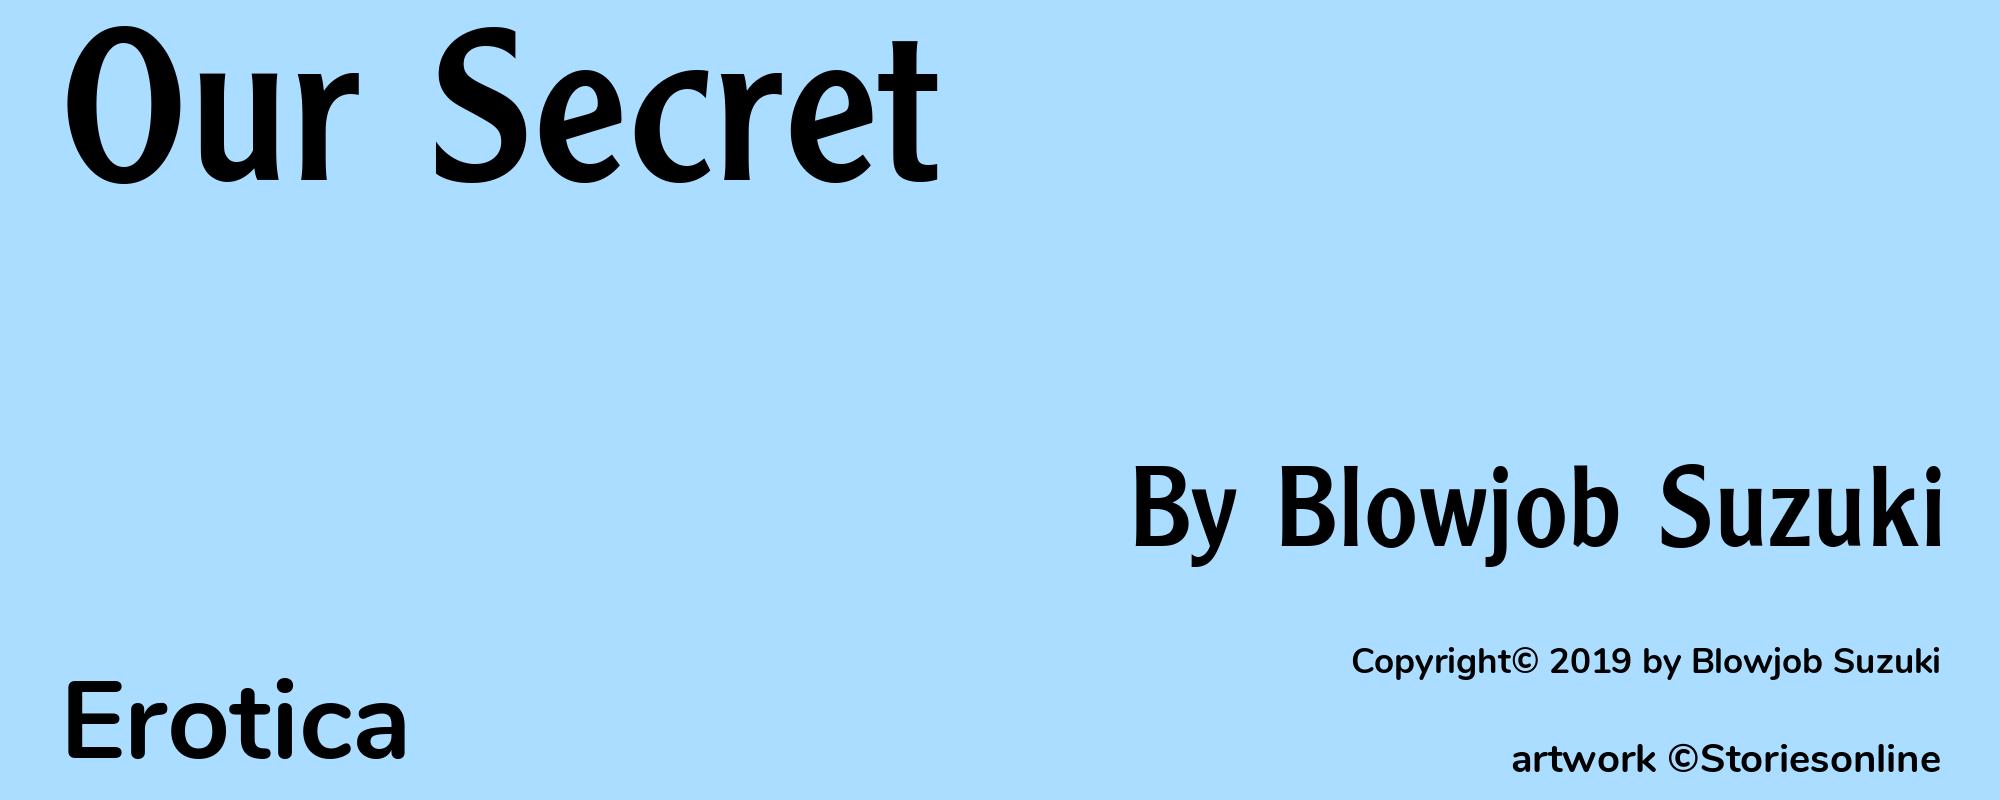 Our Secret - Cover